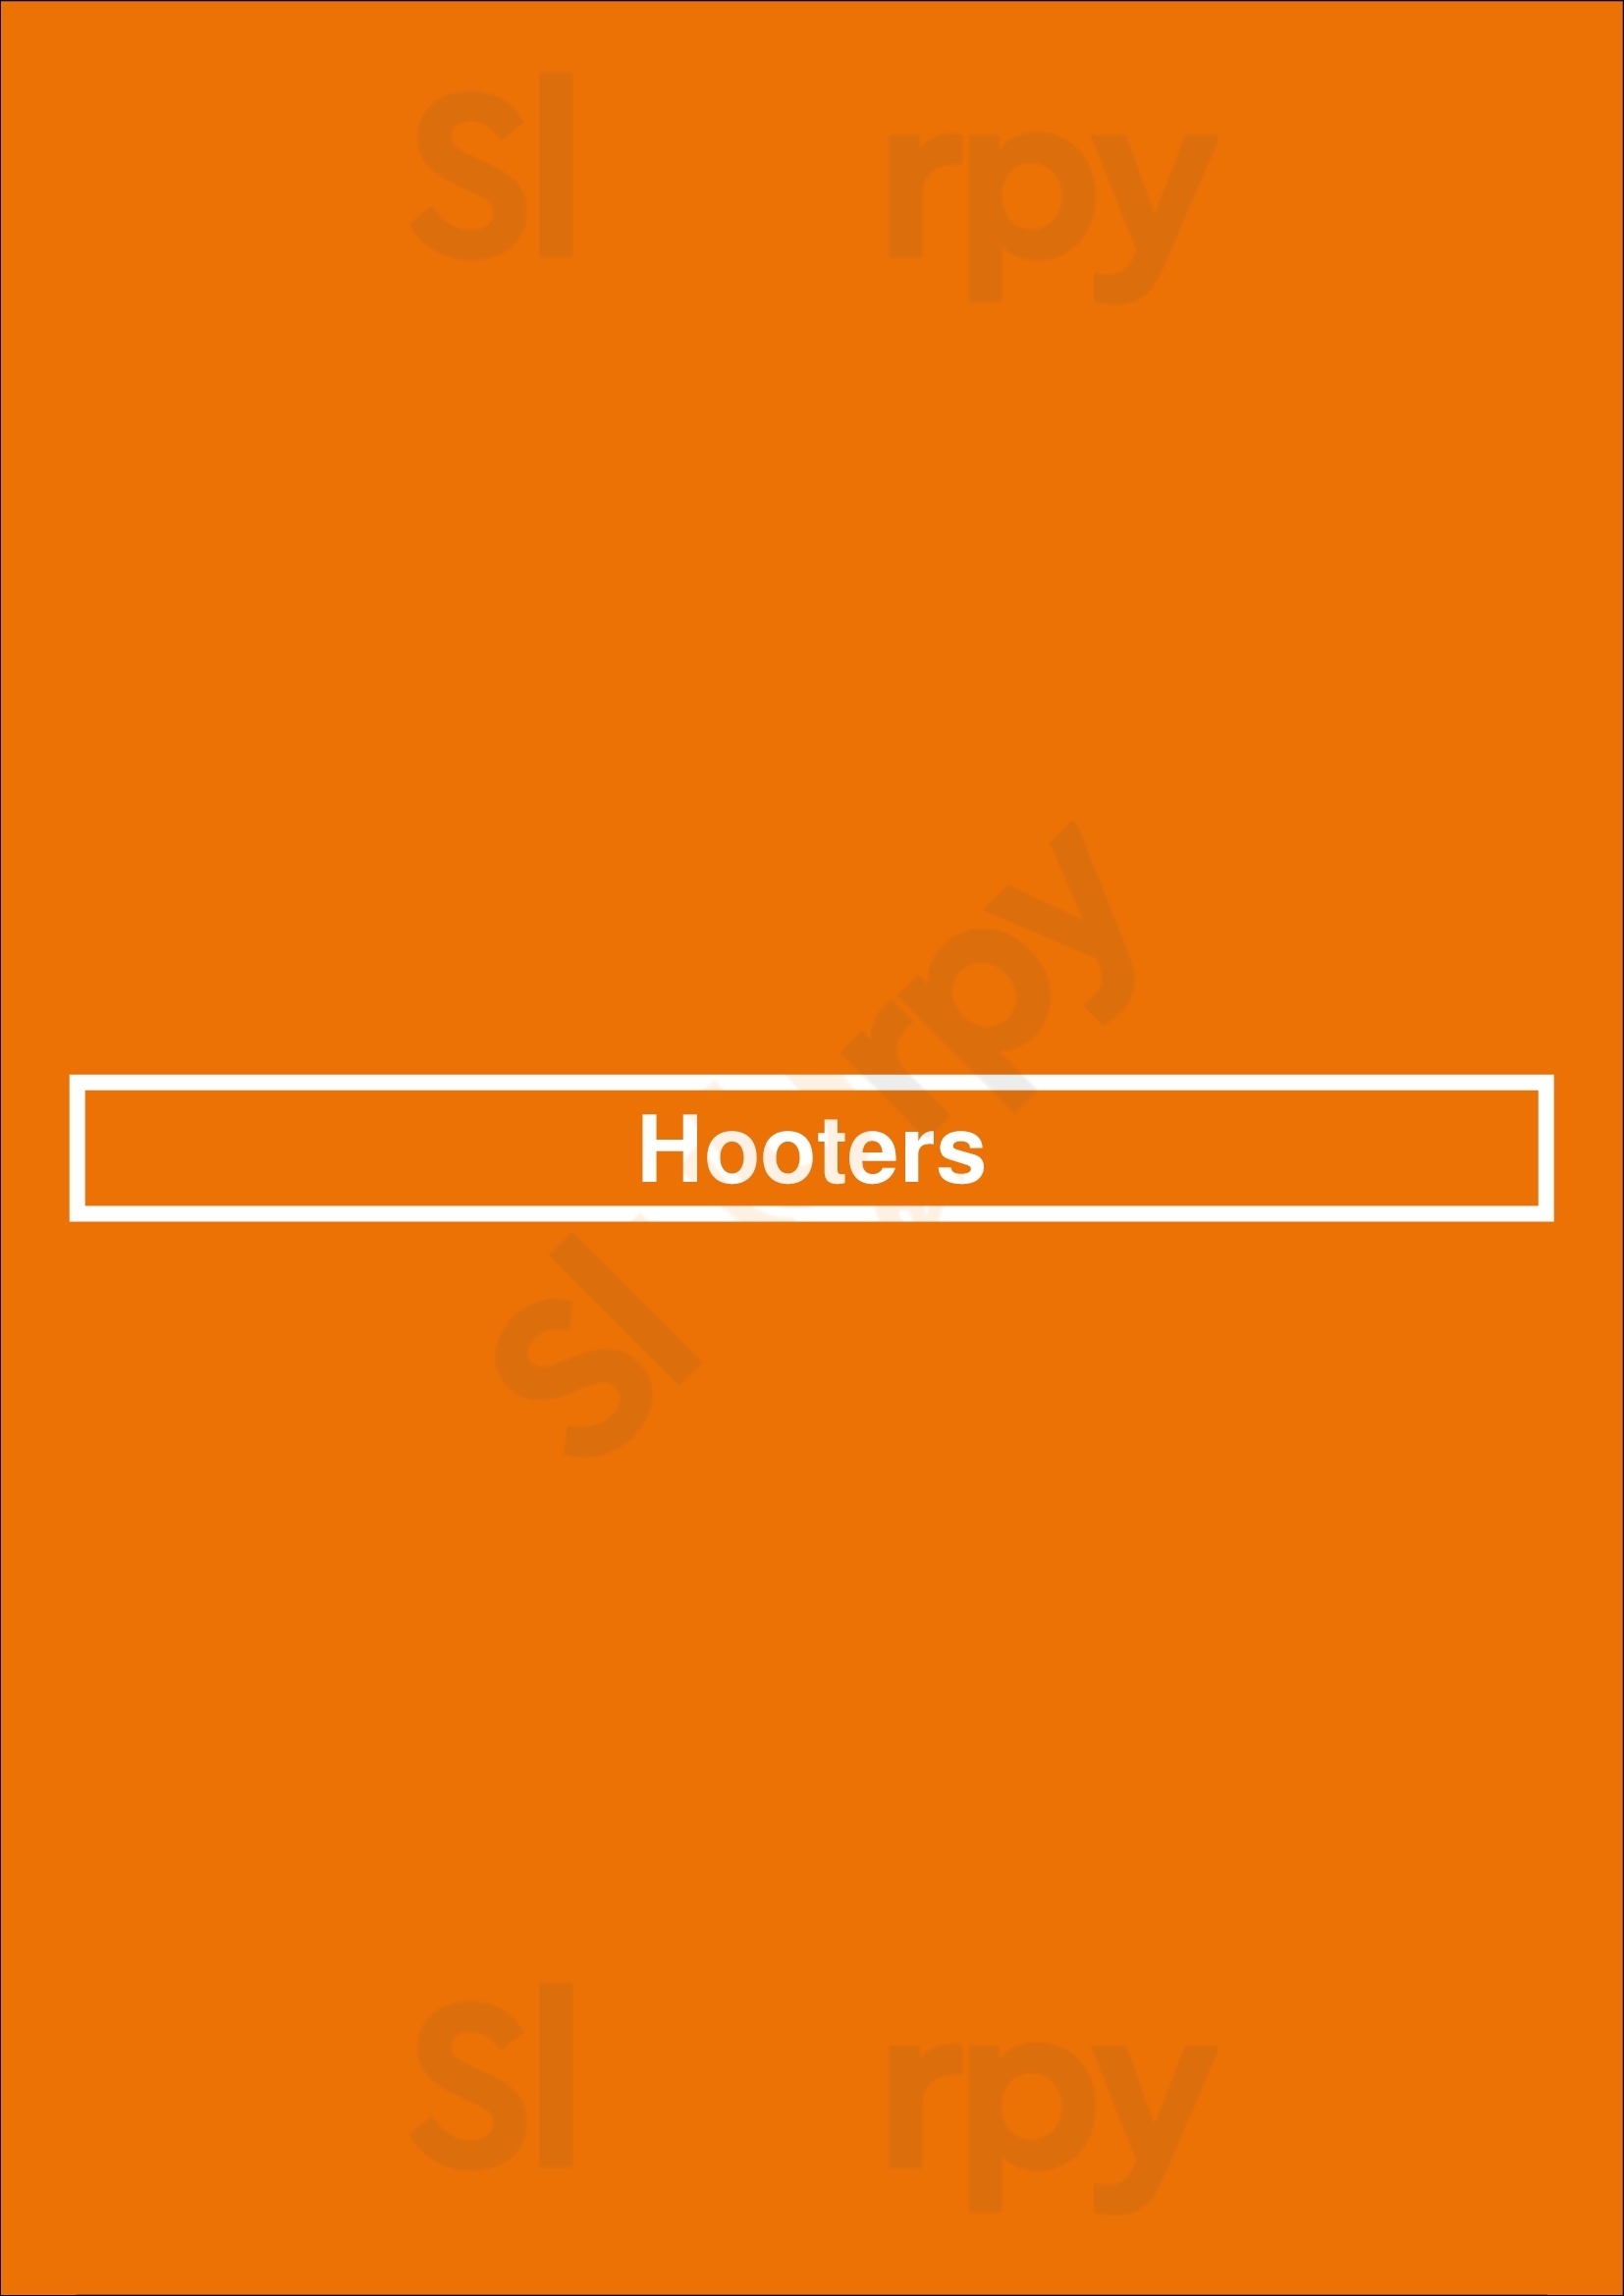 Hooters Houston Menu - 1